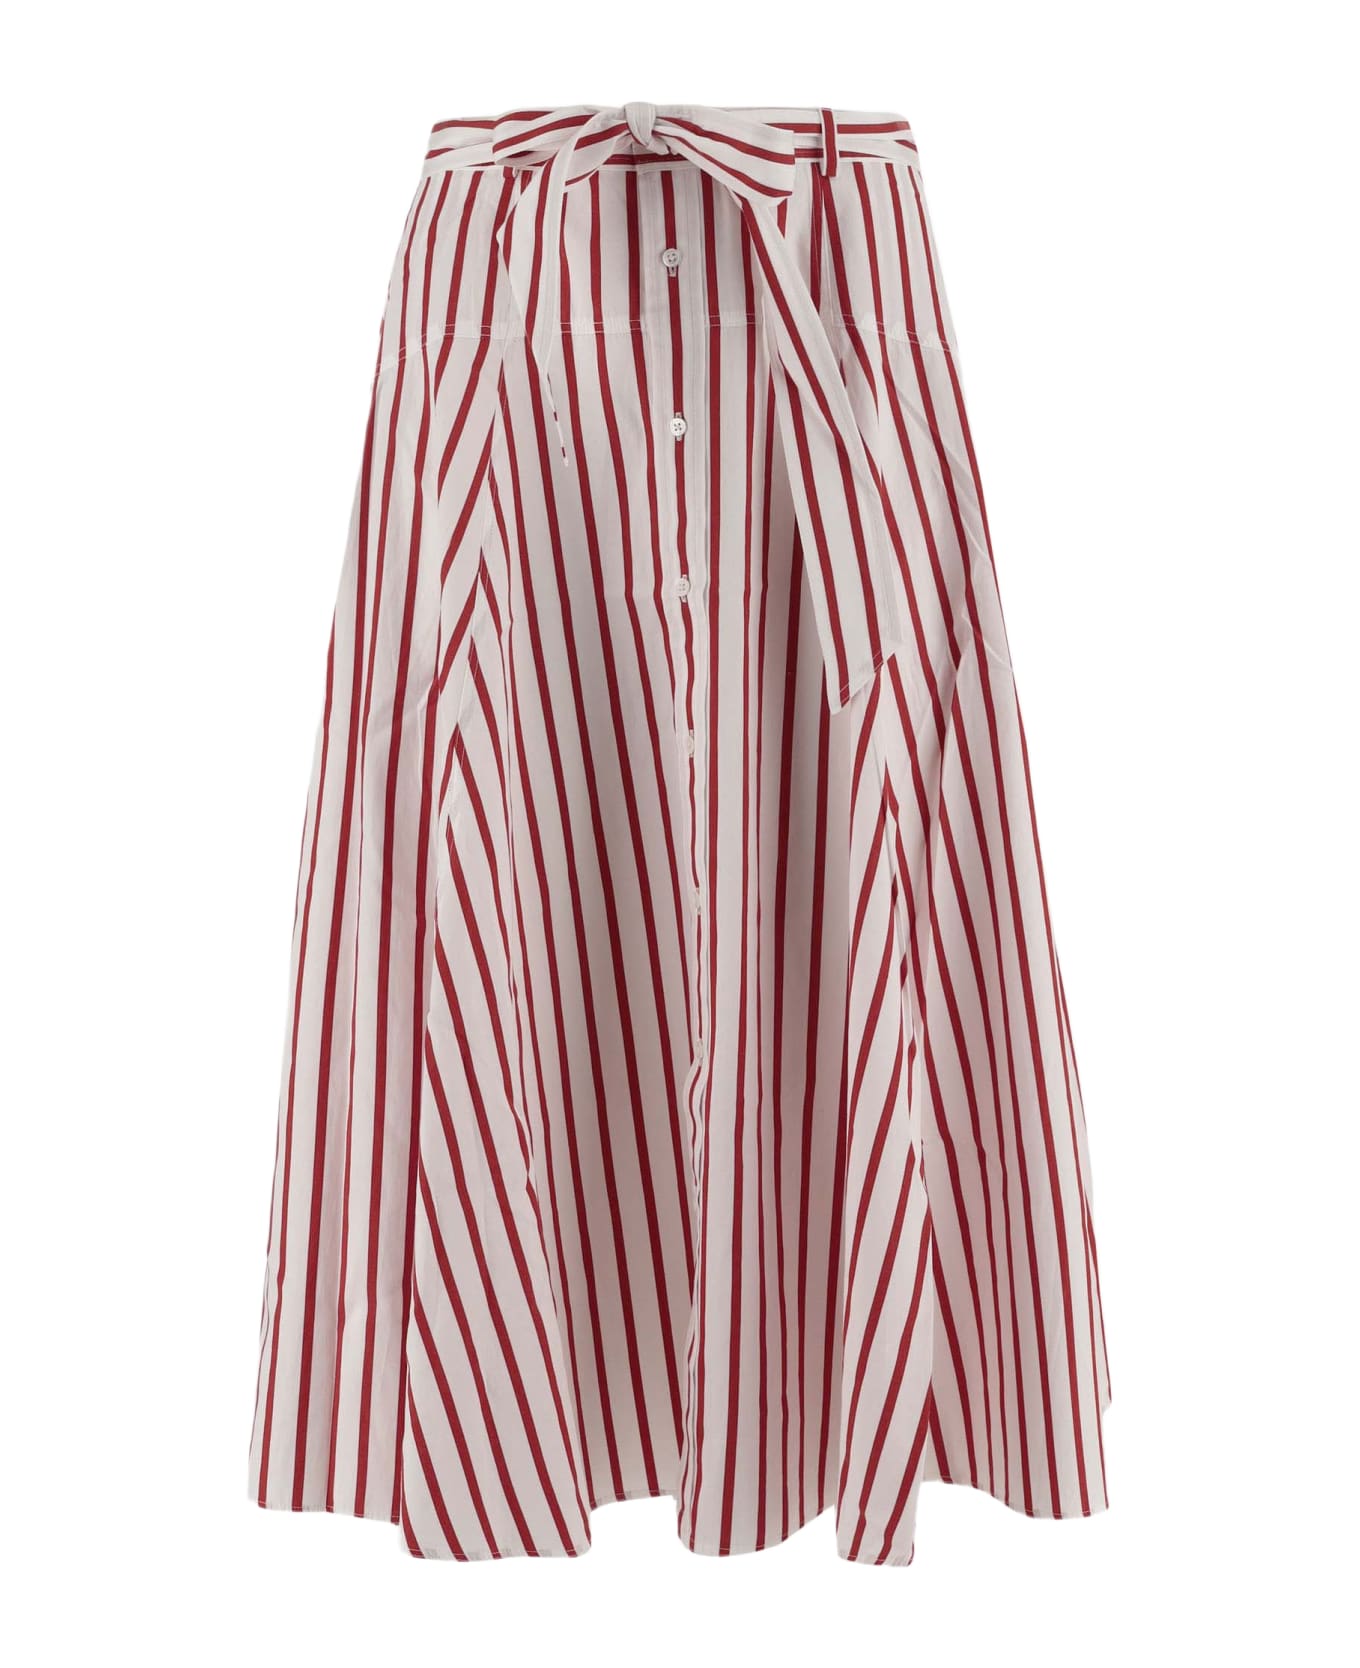 Polo Ralph Lauren Striped Cotton Skirt - Red